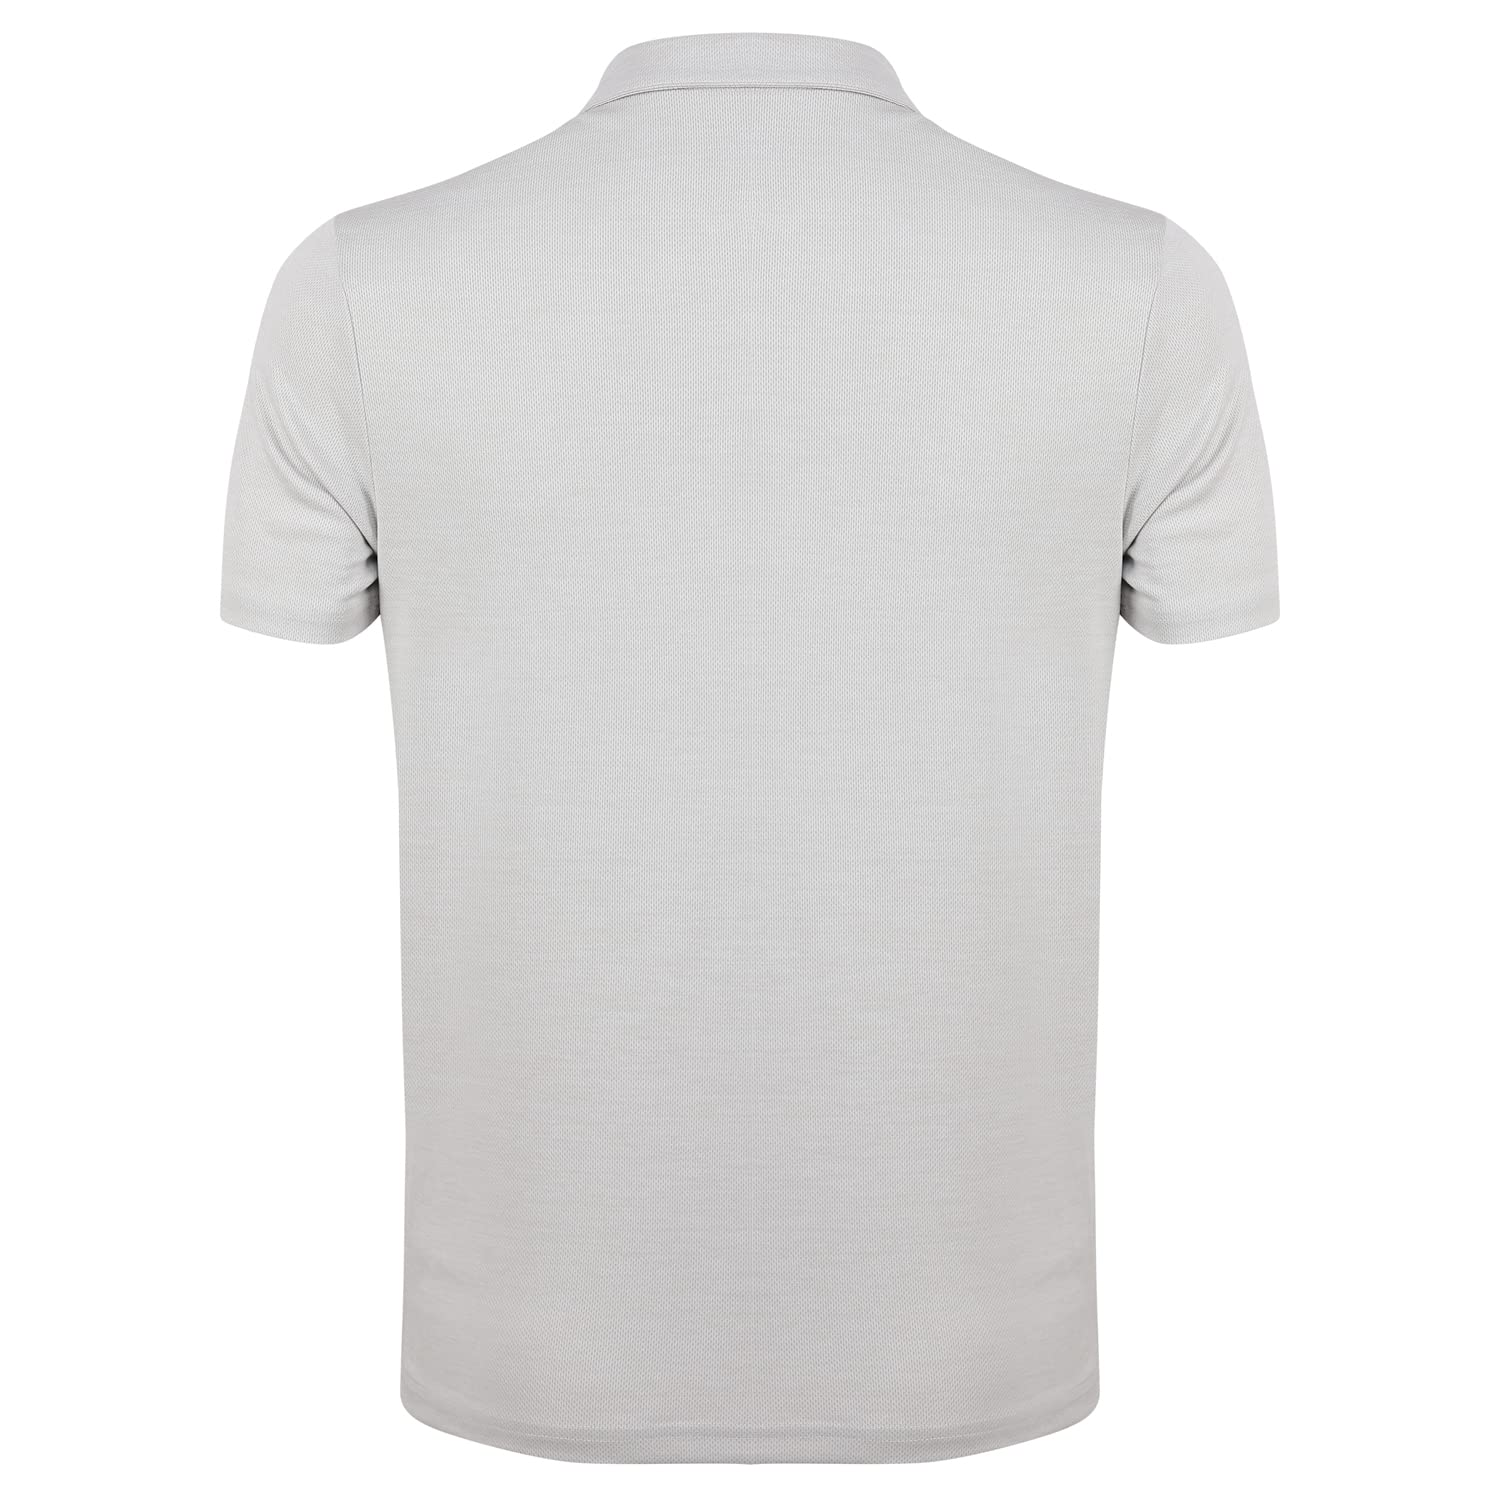 Yonex Polo Badminton T Shirt - White - Best Price online Prokicksports.com